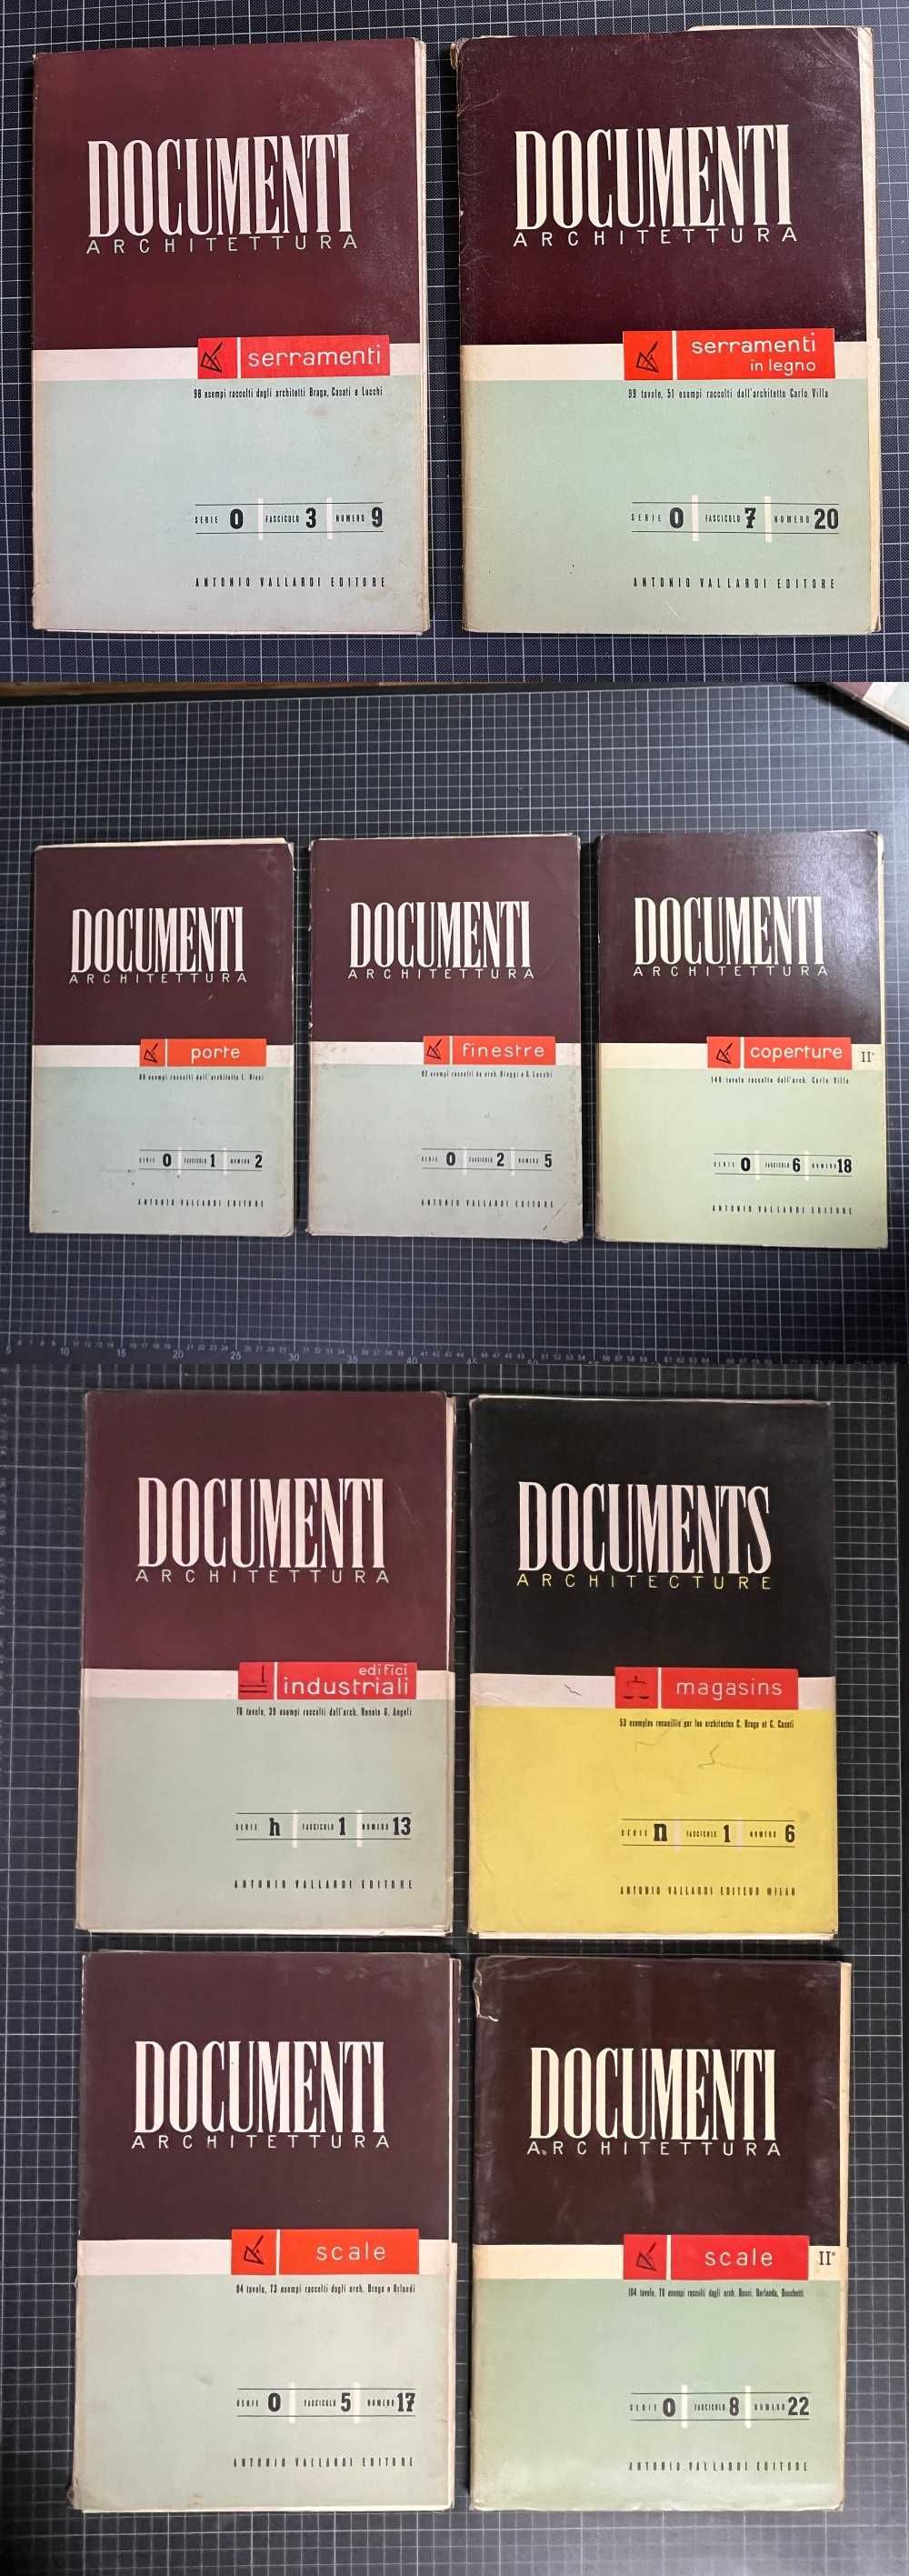 Documenti Architettura - Antonio Vallardi Editore (anos 50)